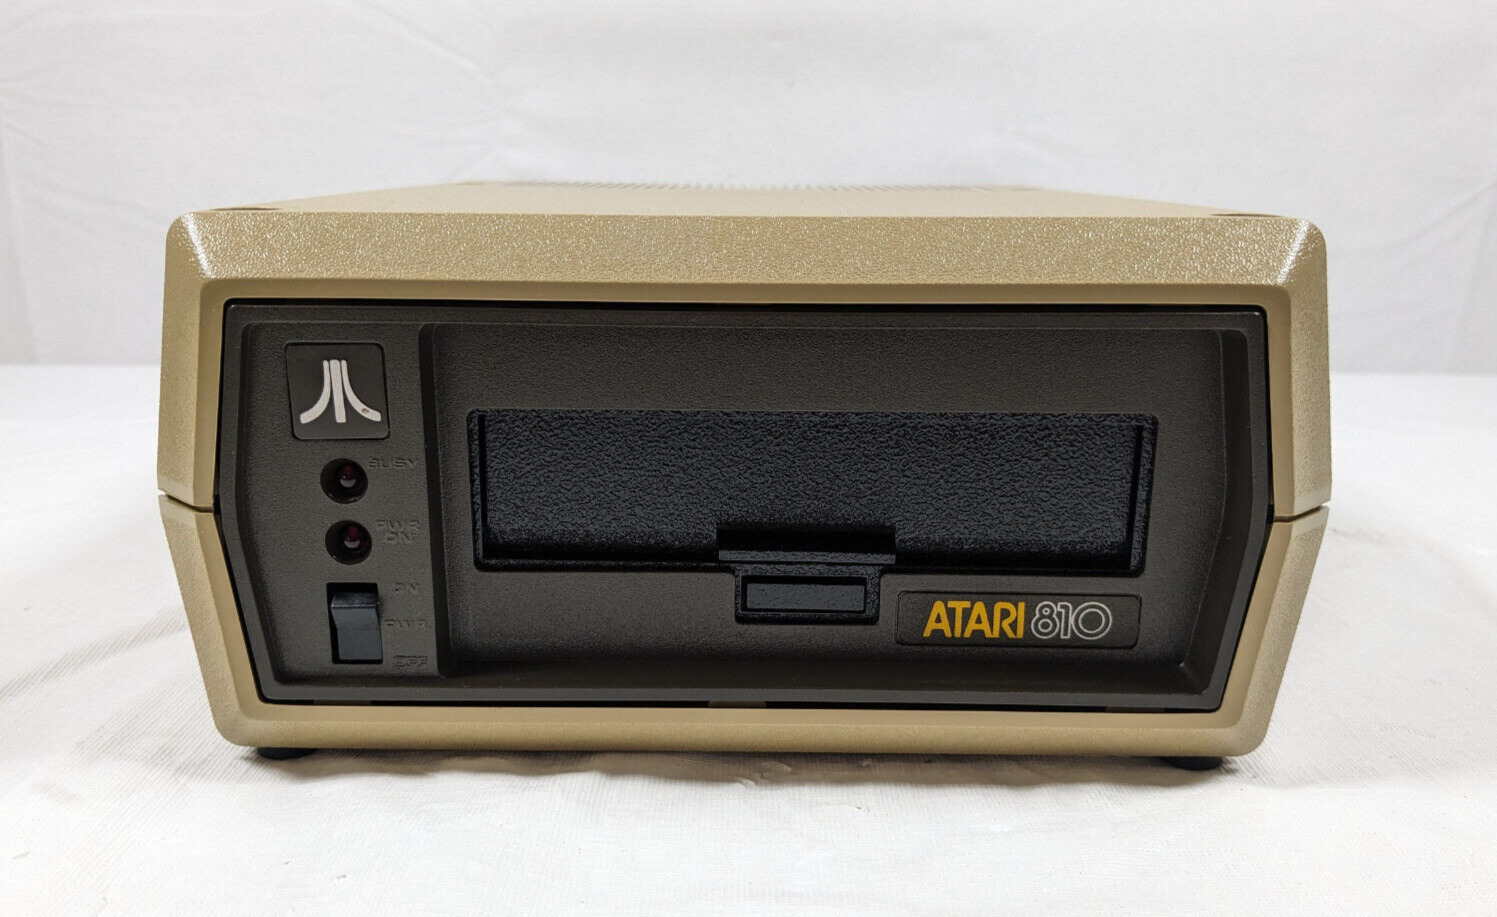 Atari 810 Floppy Drive 5.25 Single Disk No Power Supply (Untested)